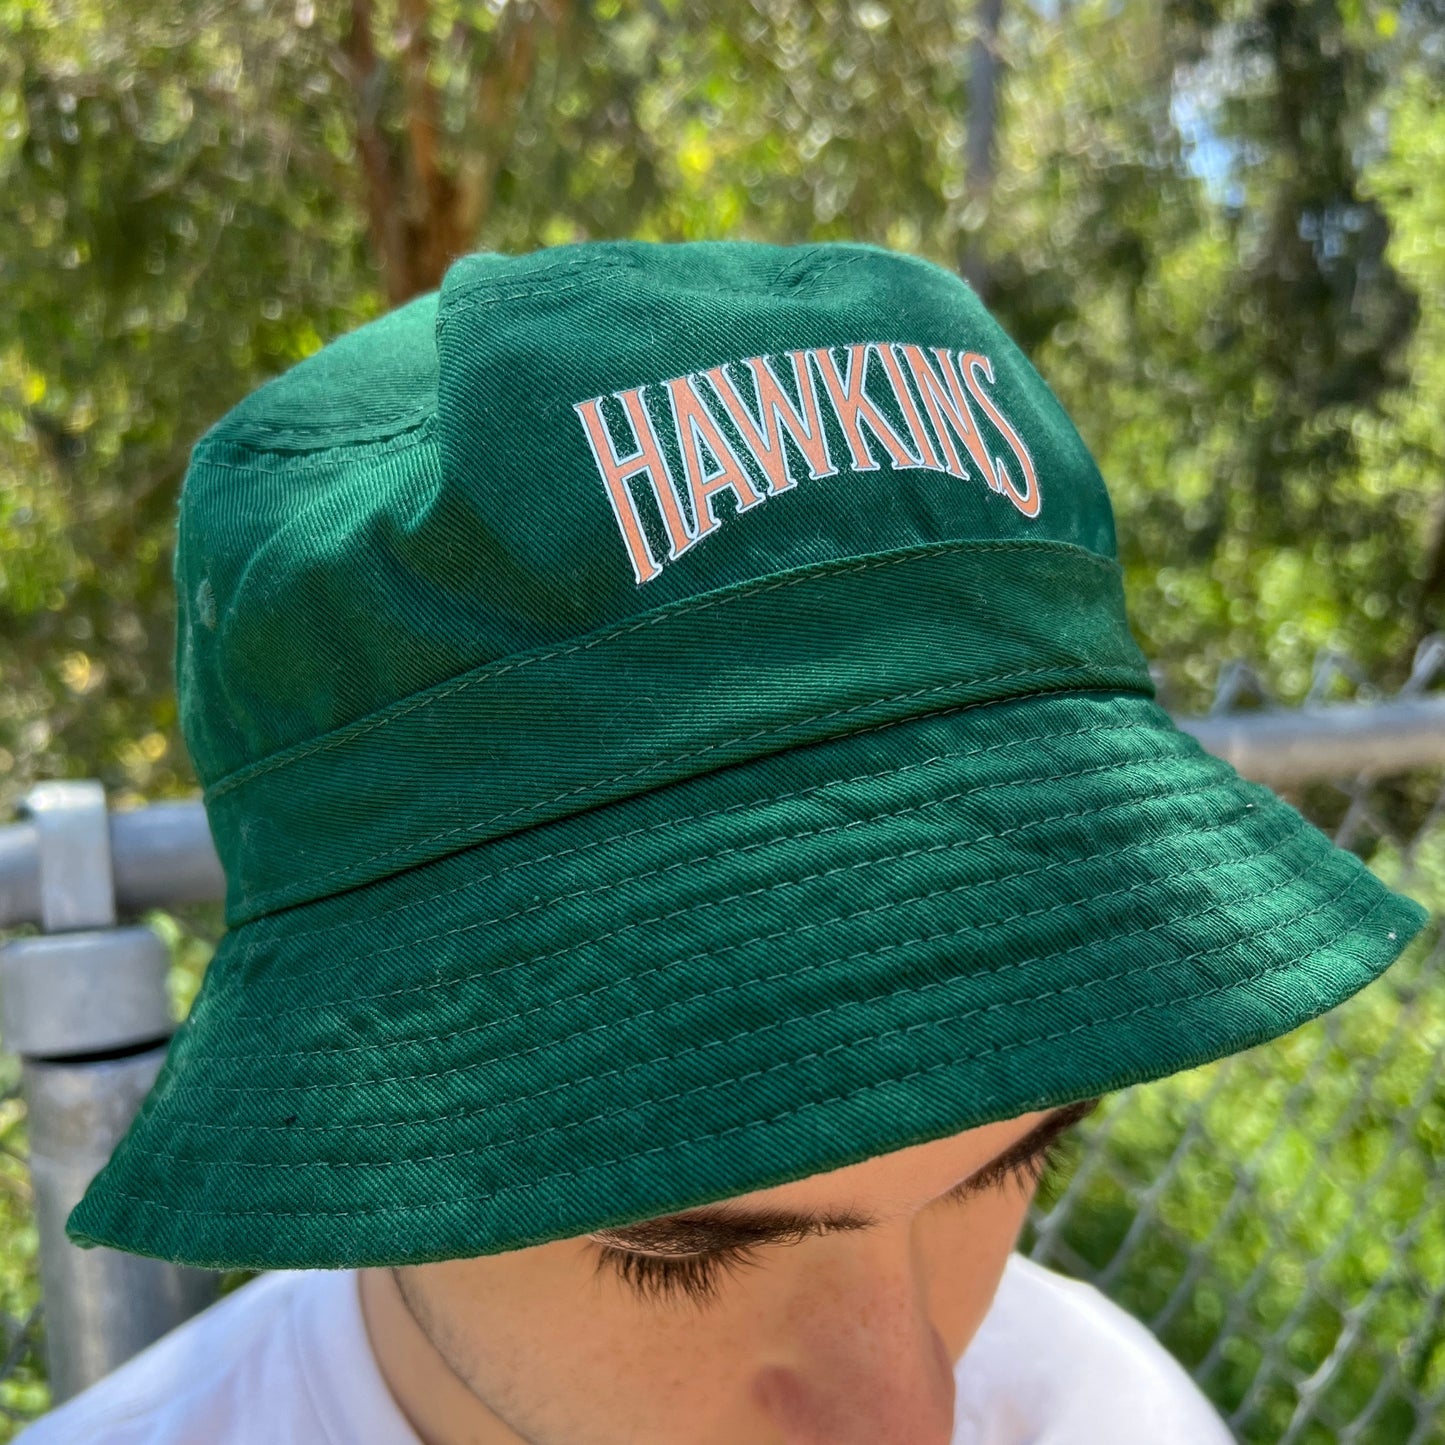 Hawkins Bucket Hat (Unisex)